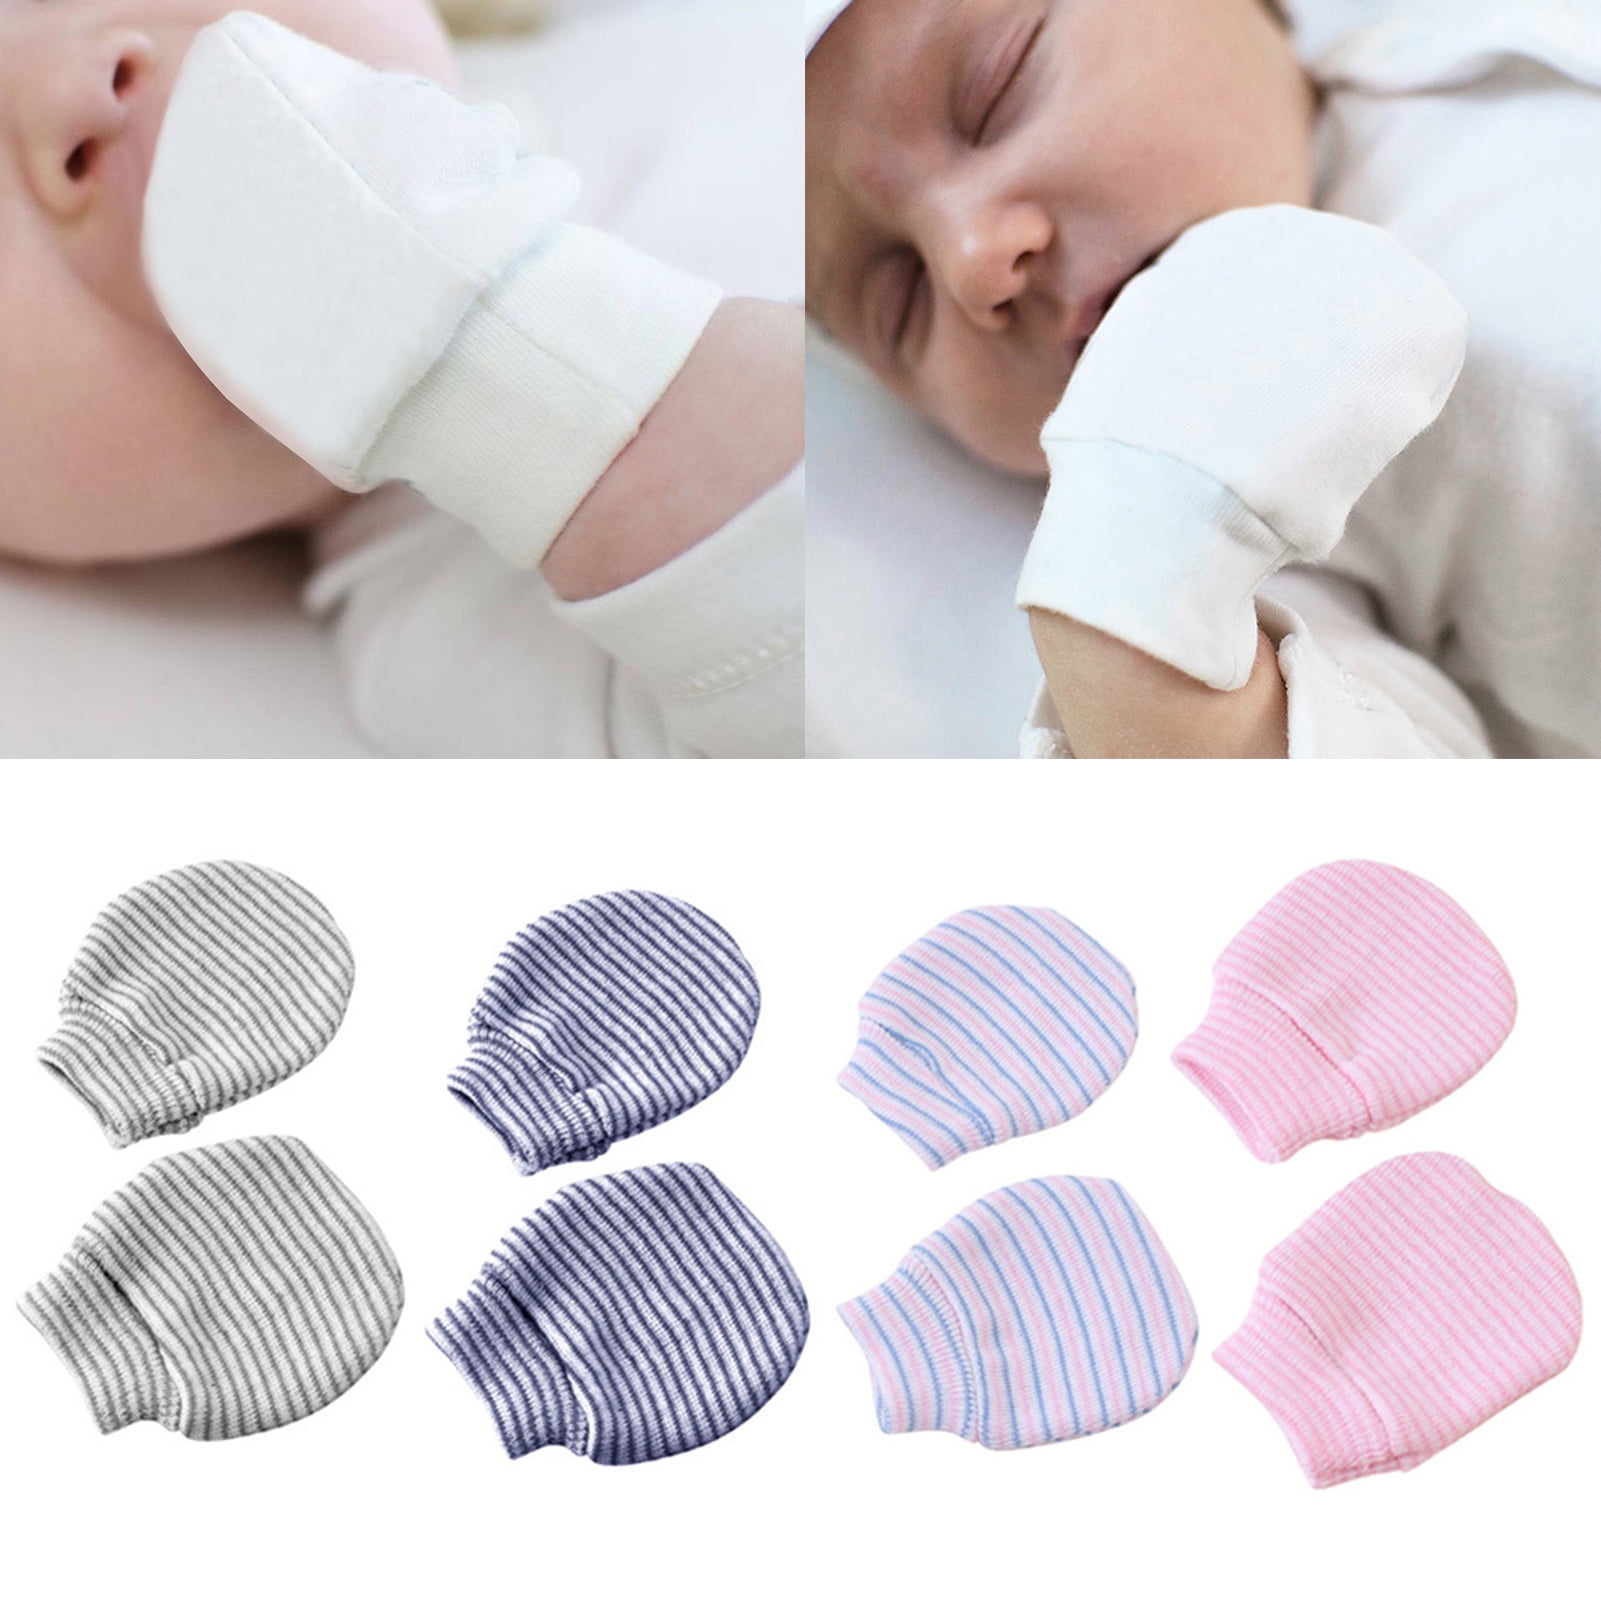 A-grey, one size Newborn Unisex No Scratch Mittens Baby Boys Girls Cotton Gloves for 0-6 Months Toddler Infant Soft Hospital Mitten